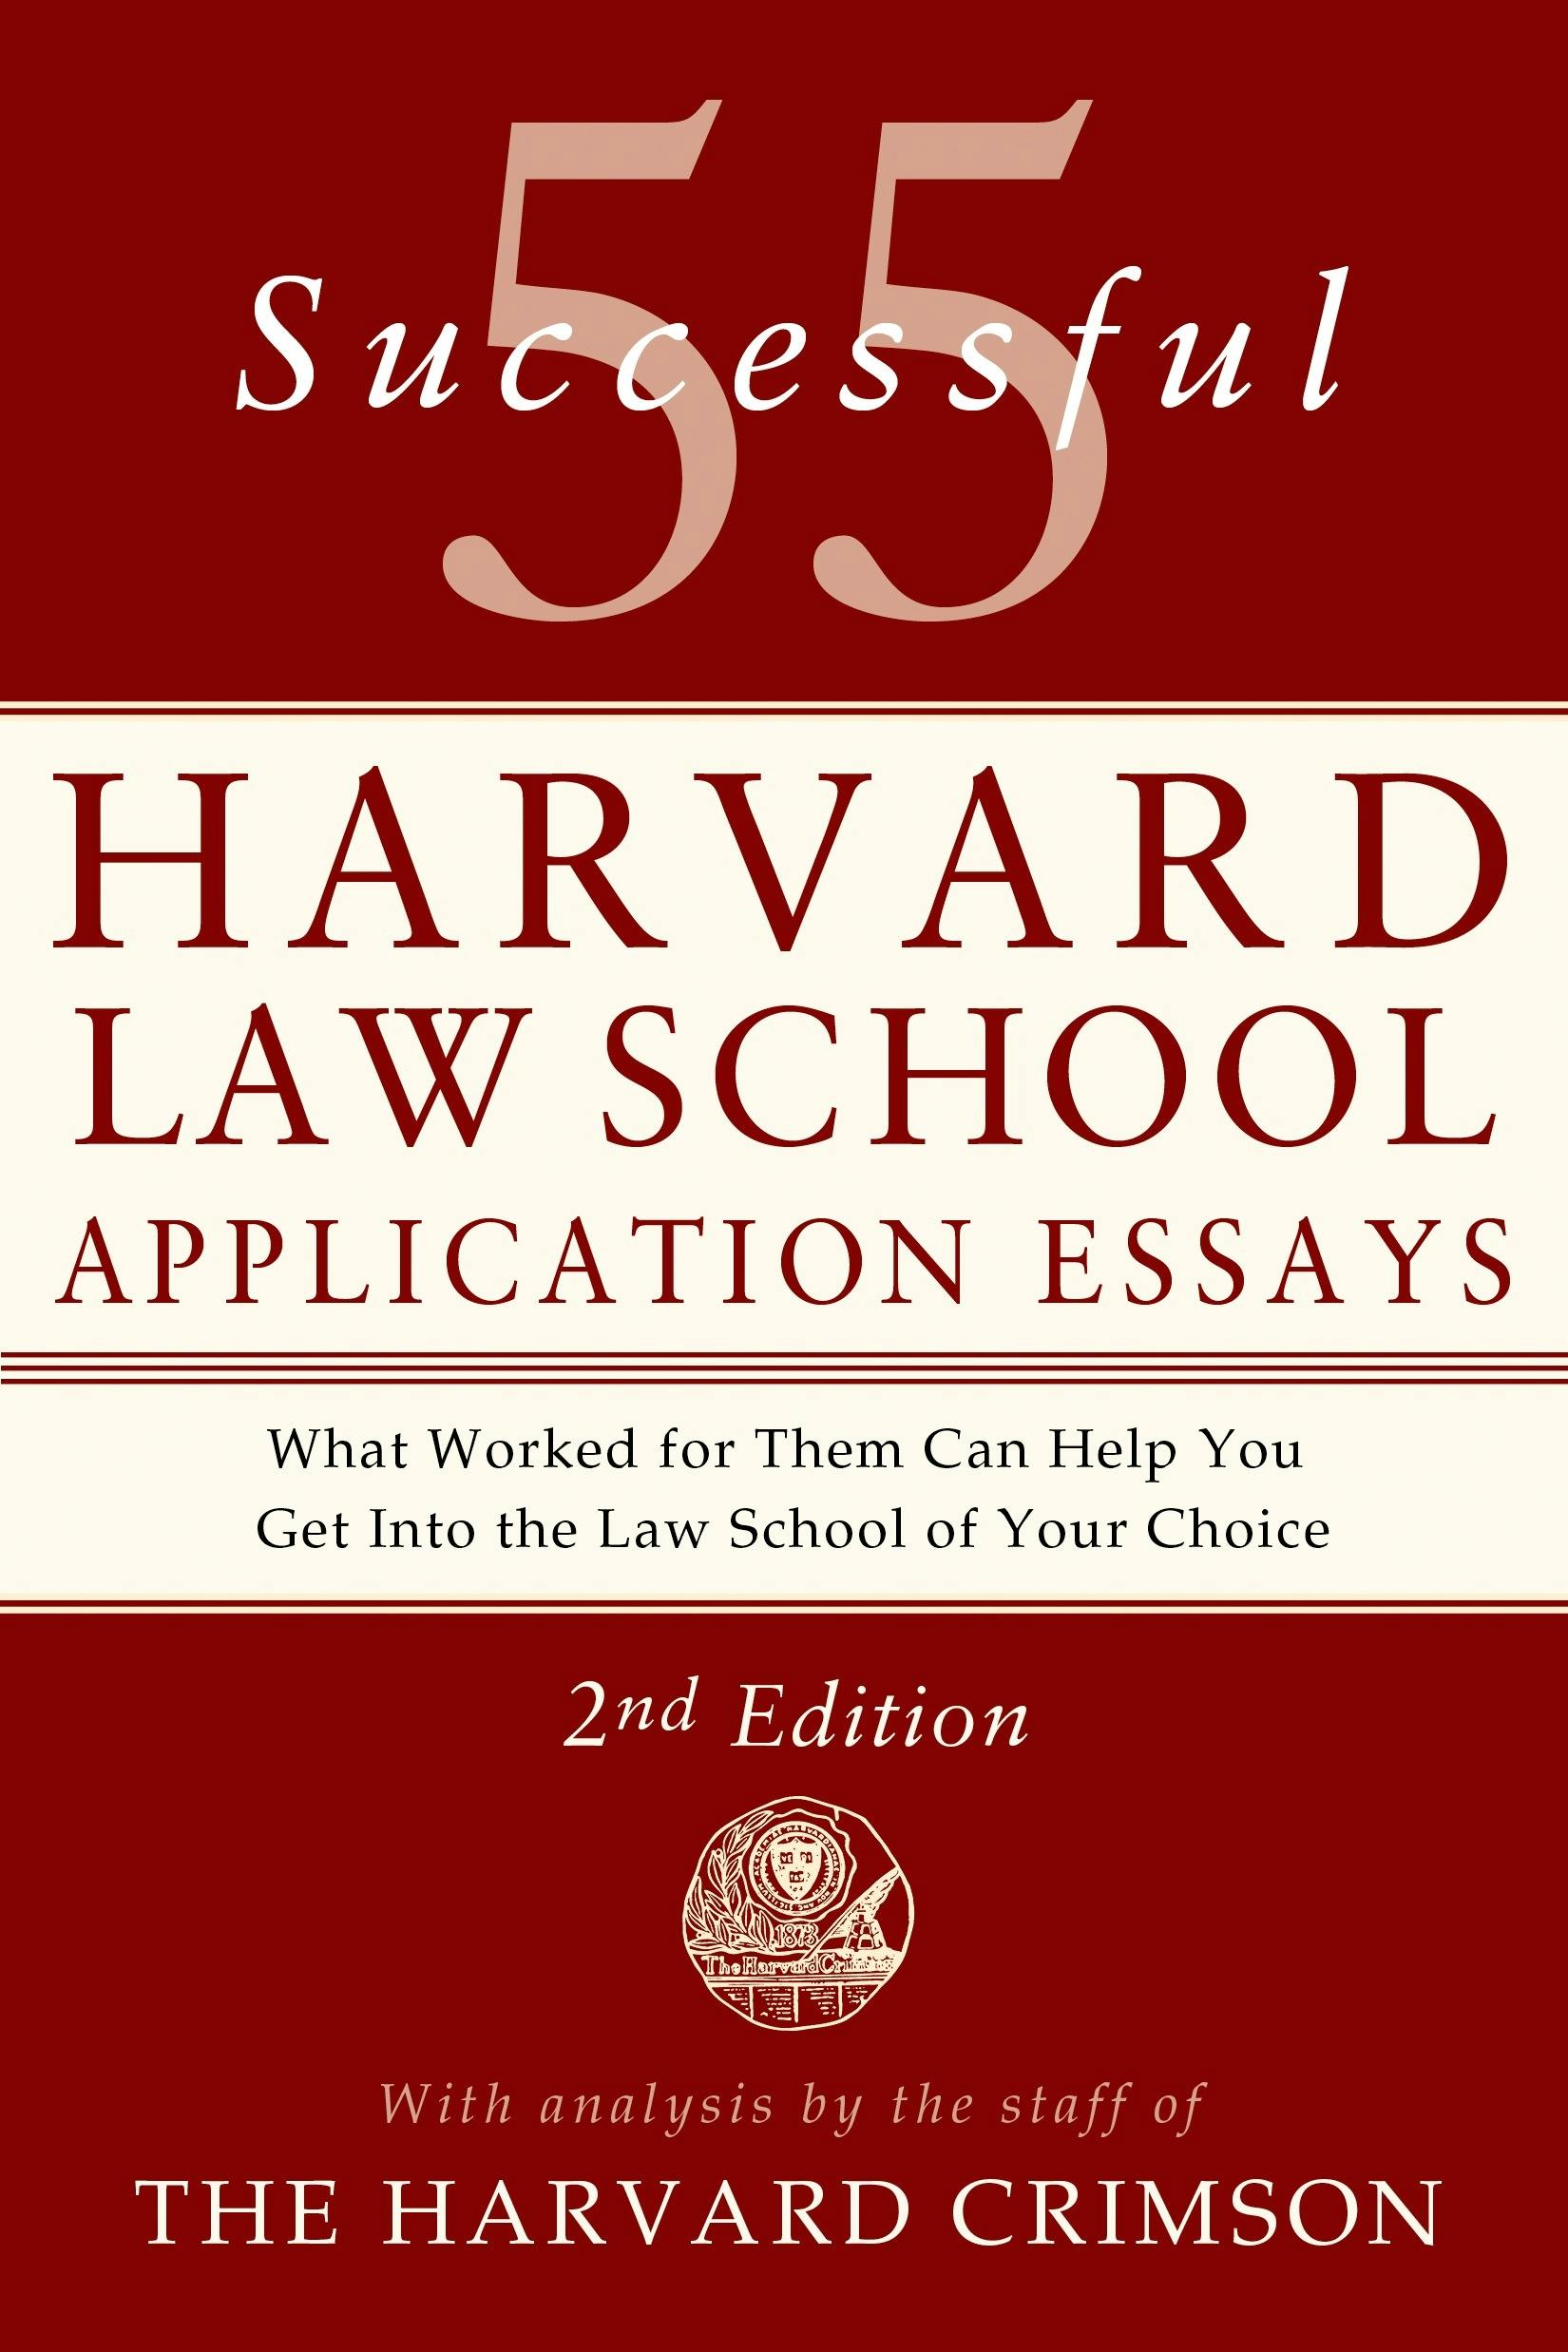 55 Successful Harvard Law School Application Essays, 2nd Edition